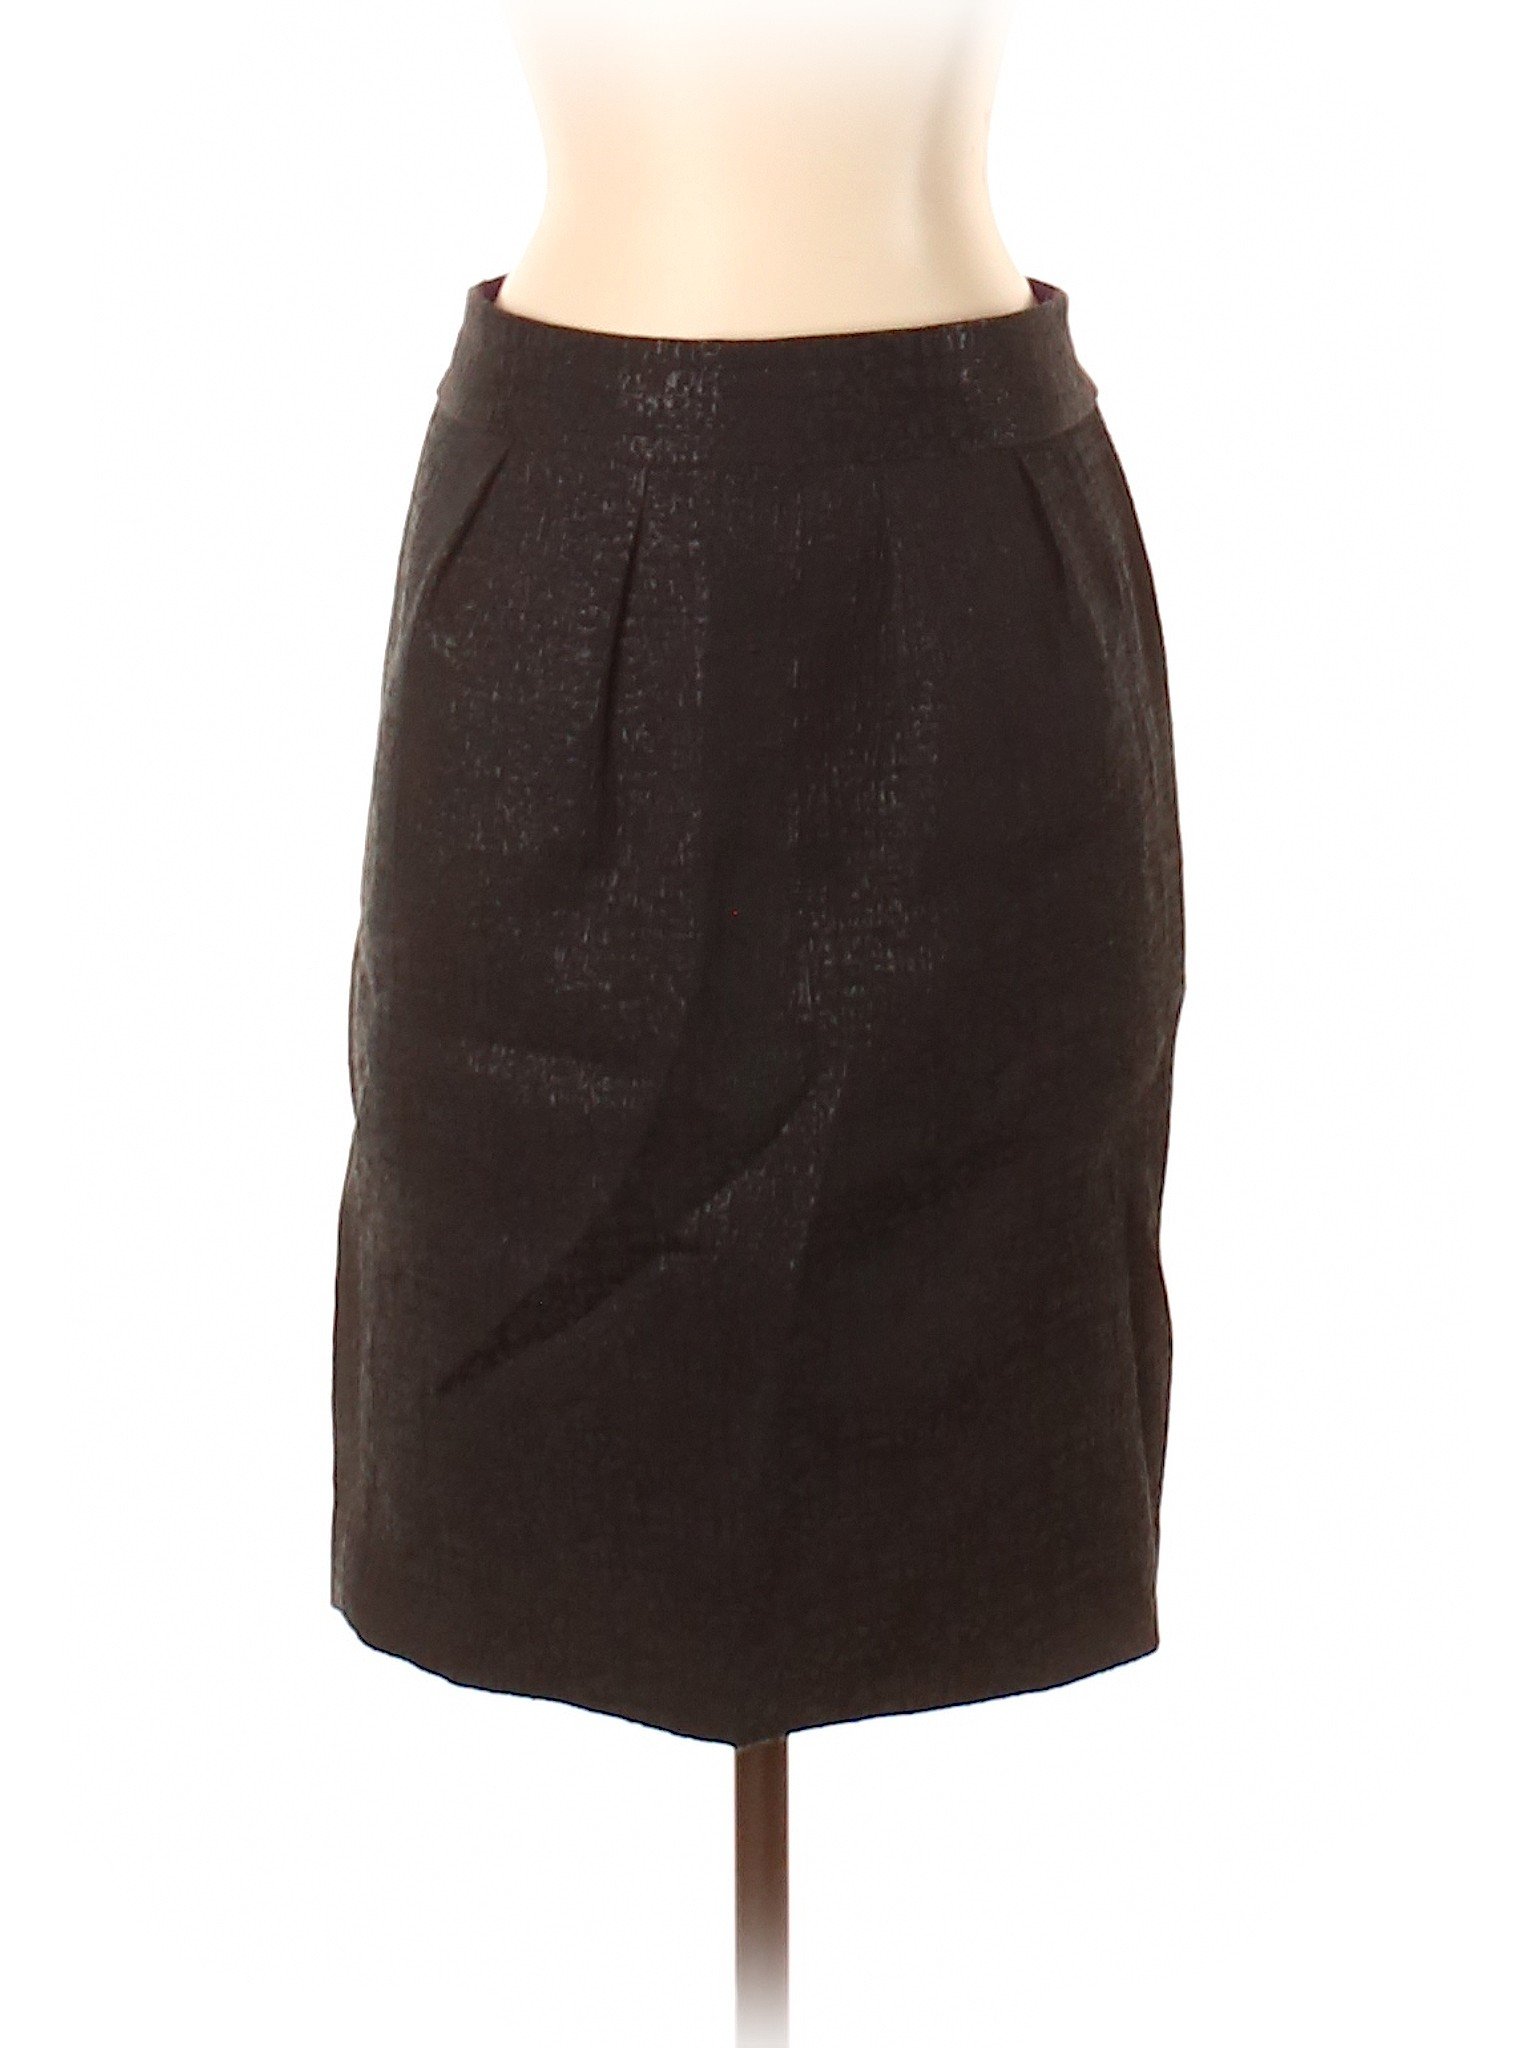 Banana Republic Women Brown Casual Skirt 2 | eBay